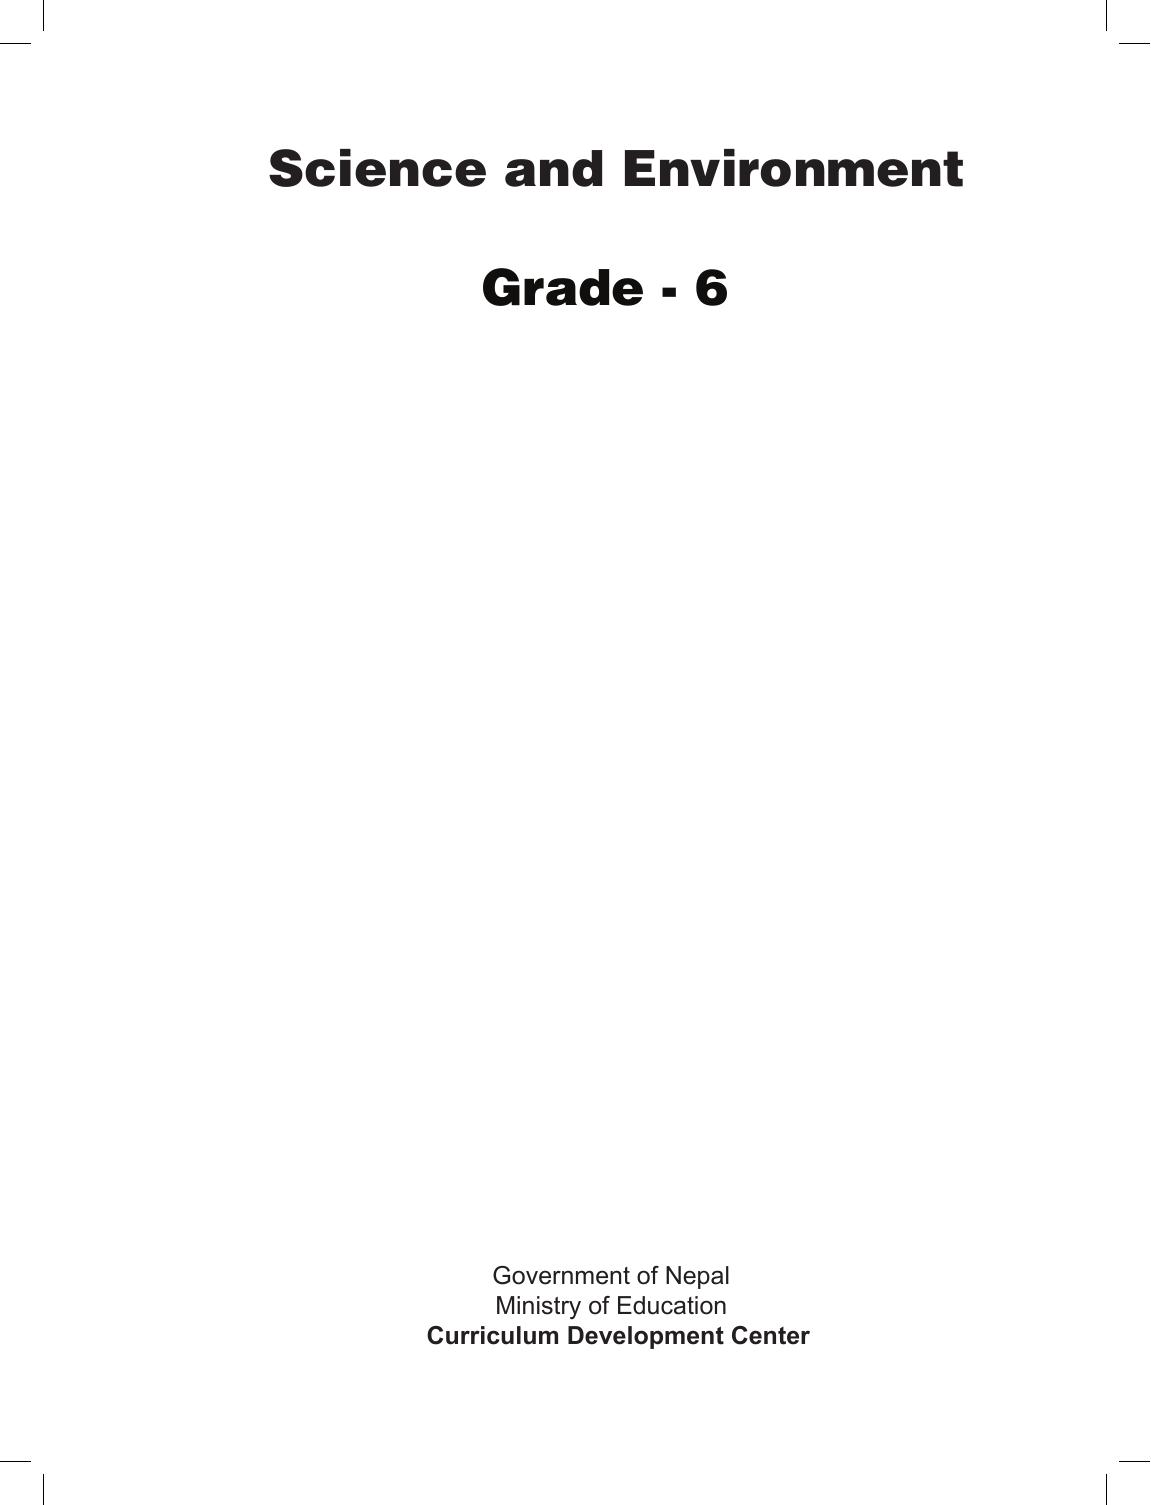 CDC 2018 - Sceince Grade 6